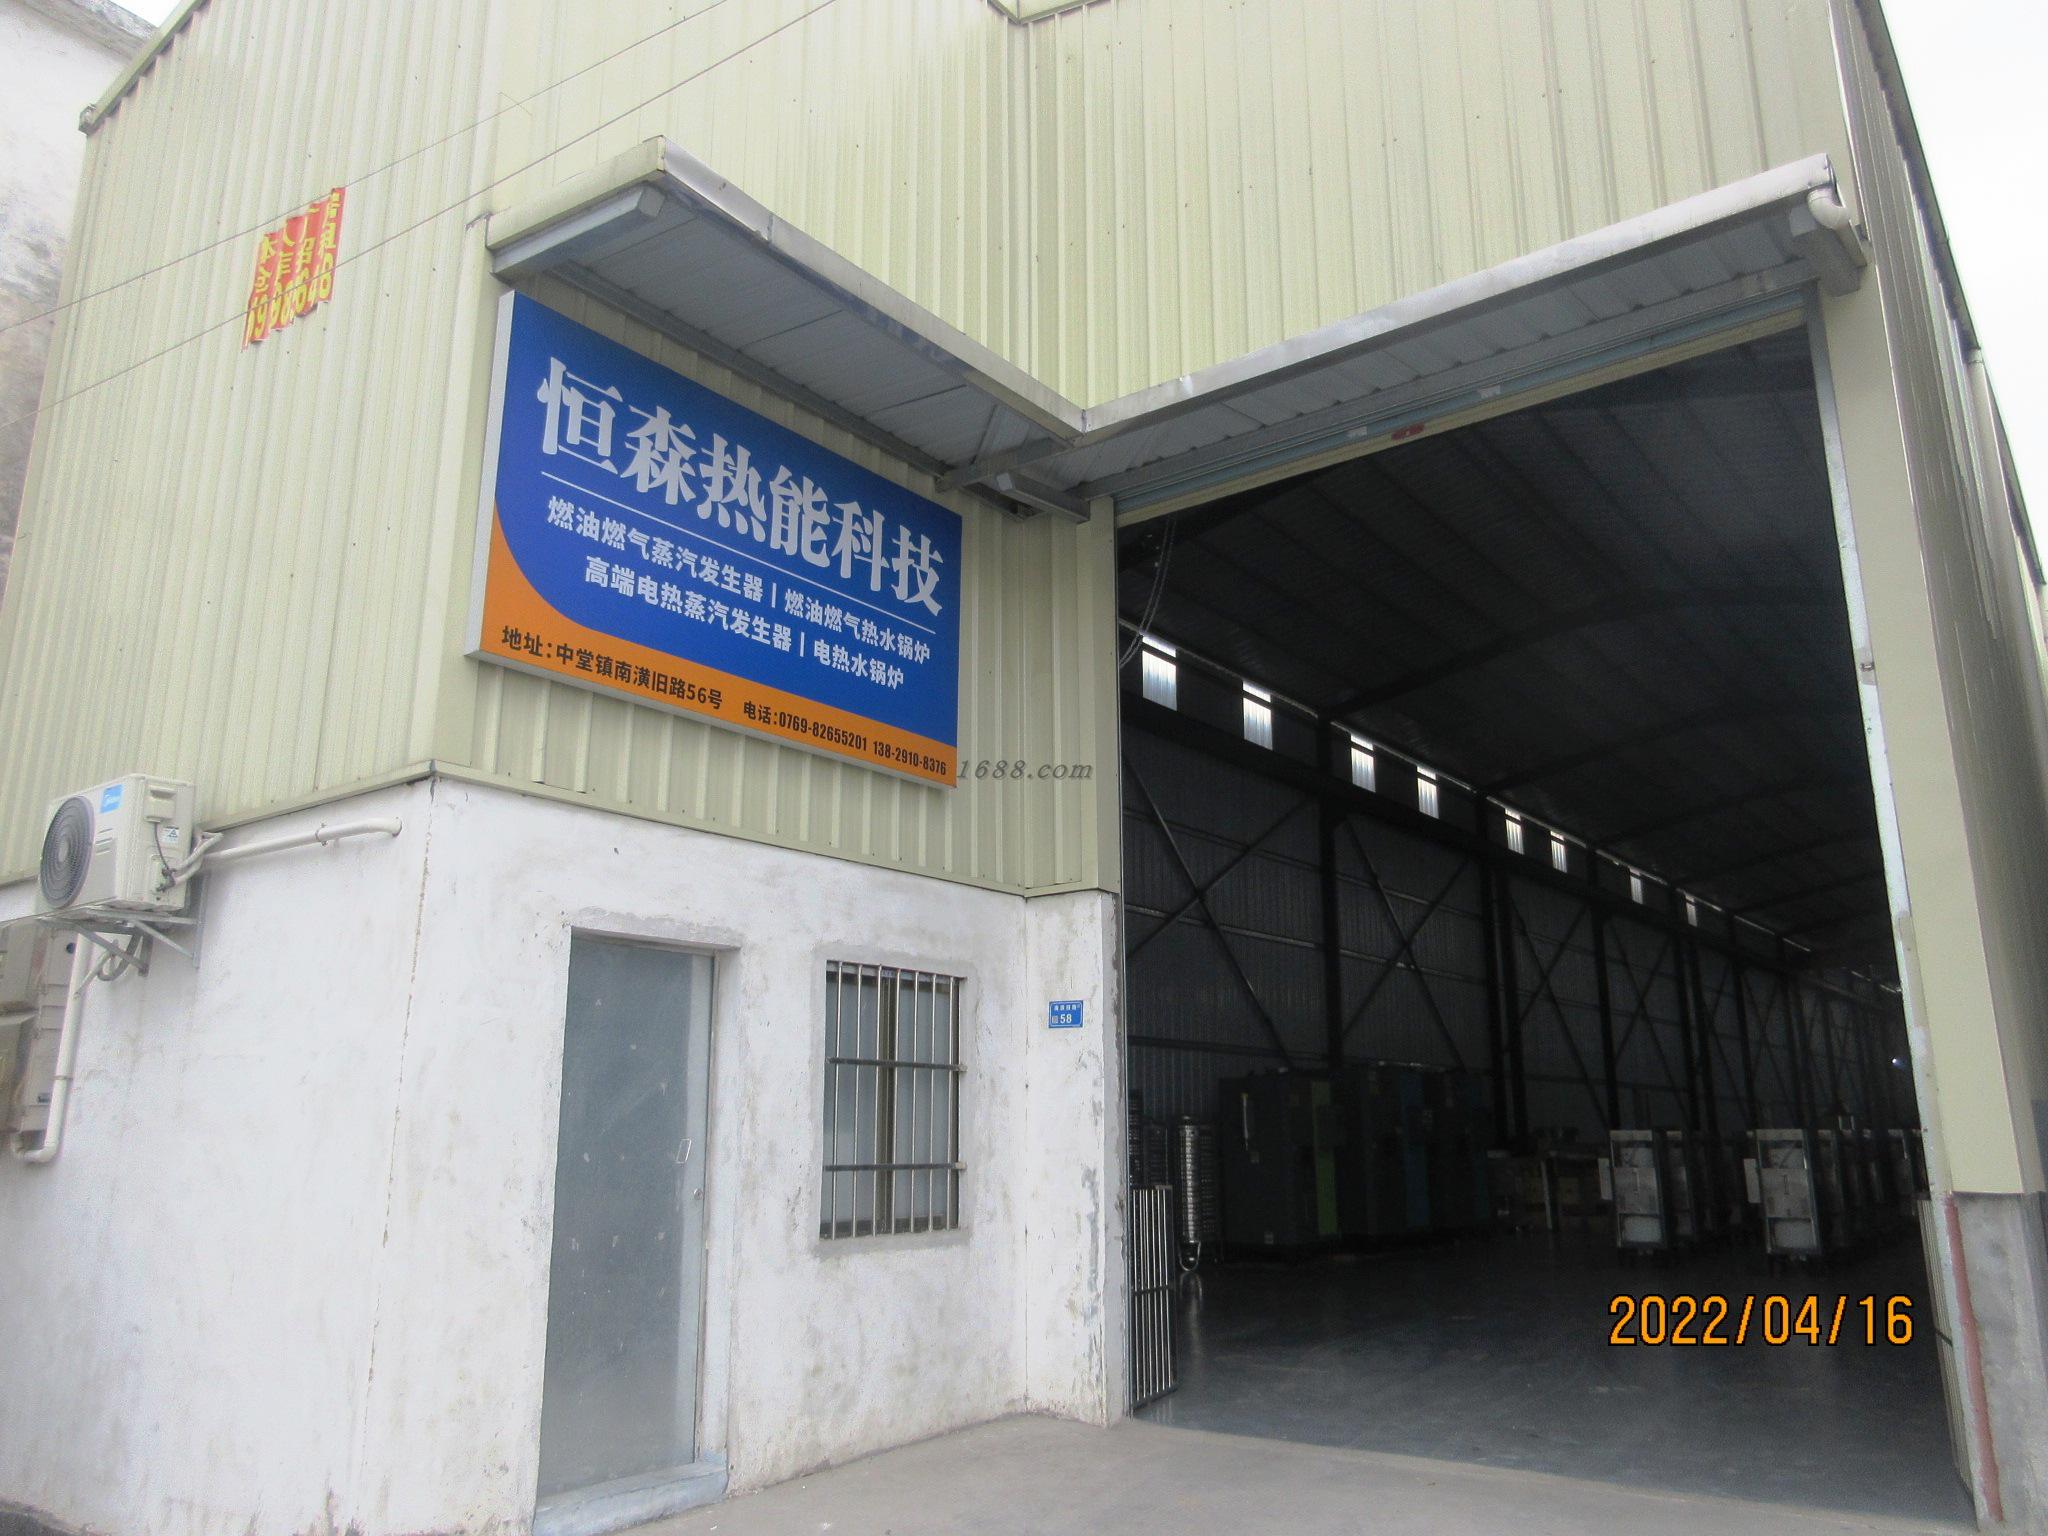   Dongguan Hengsen Thermal Energy Technology Co., Ltd